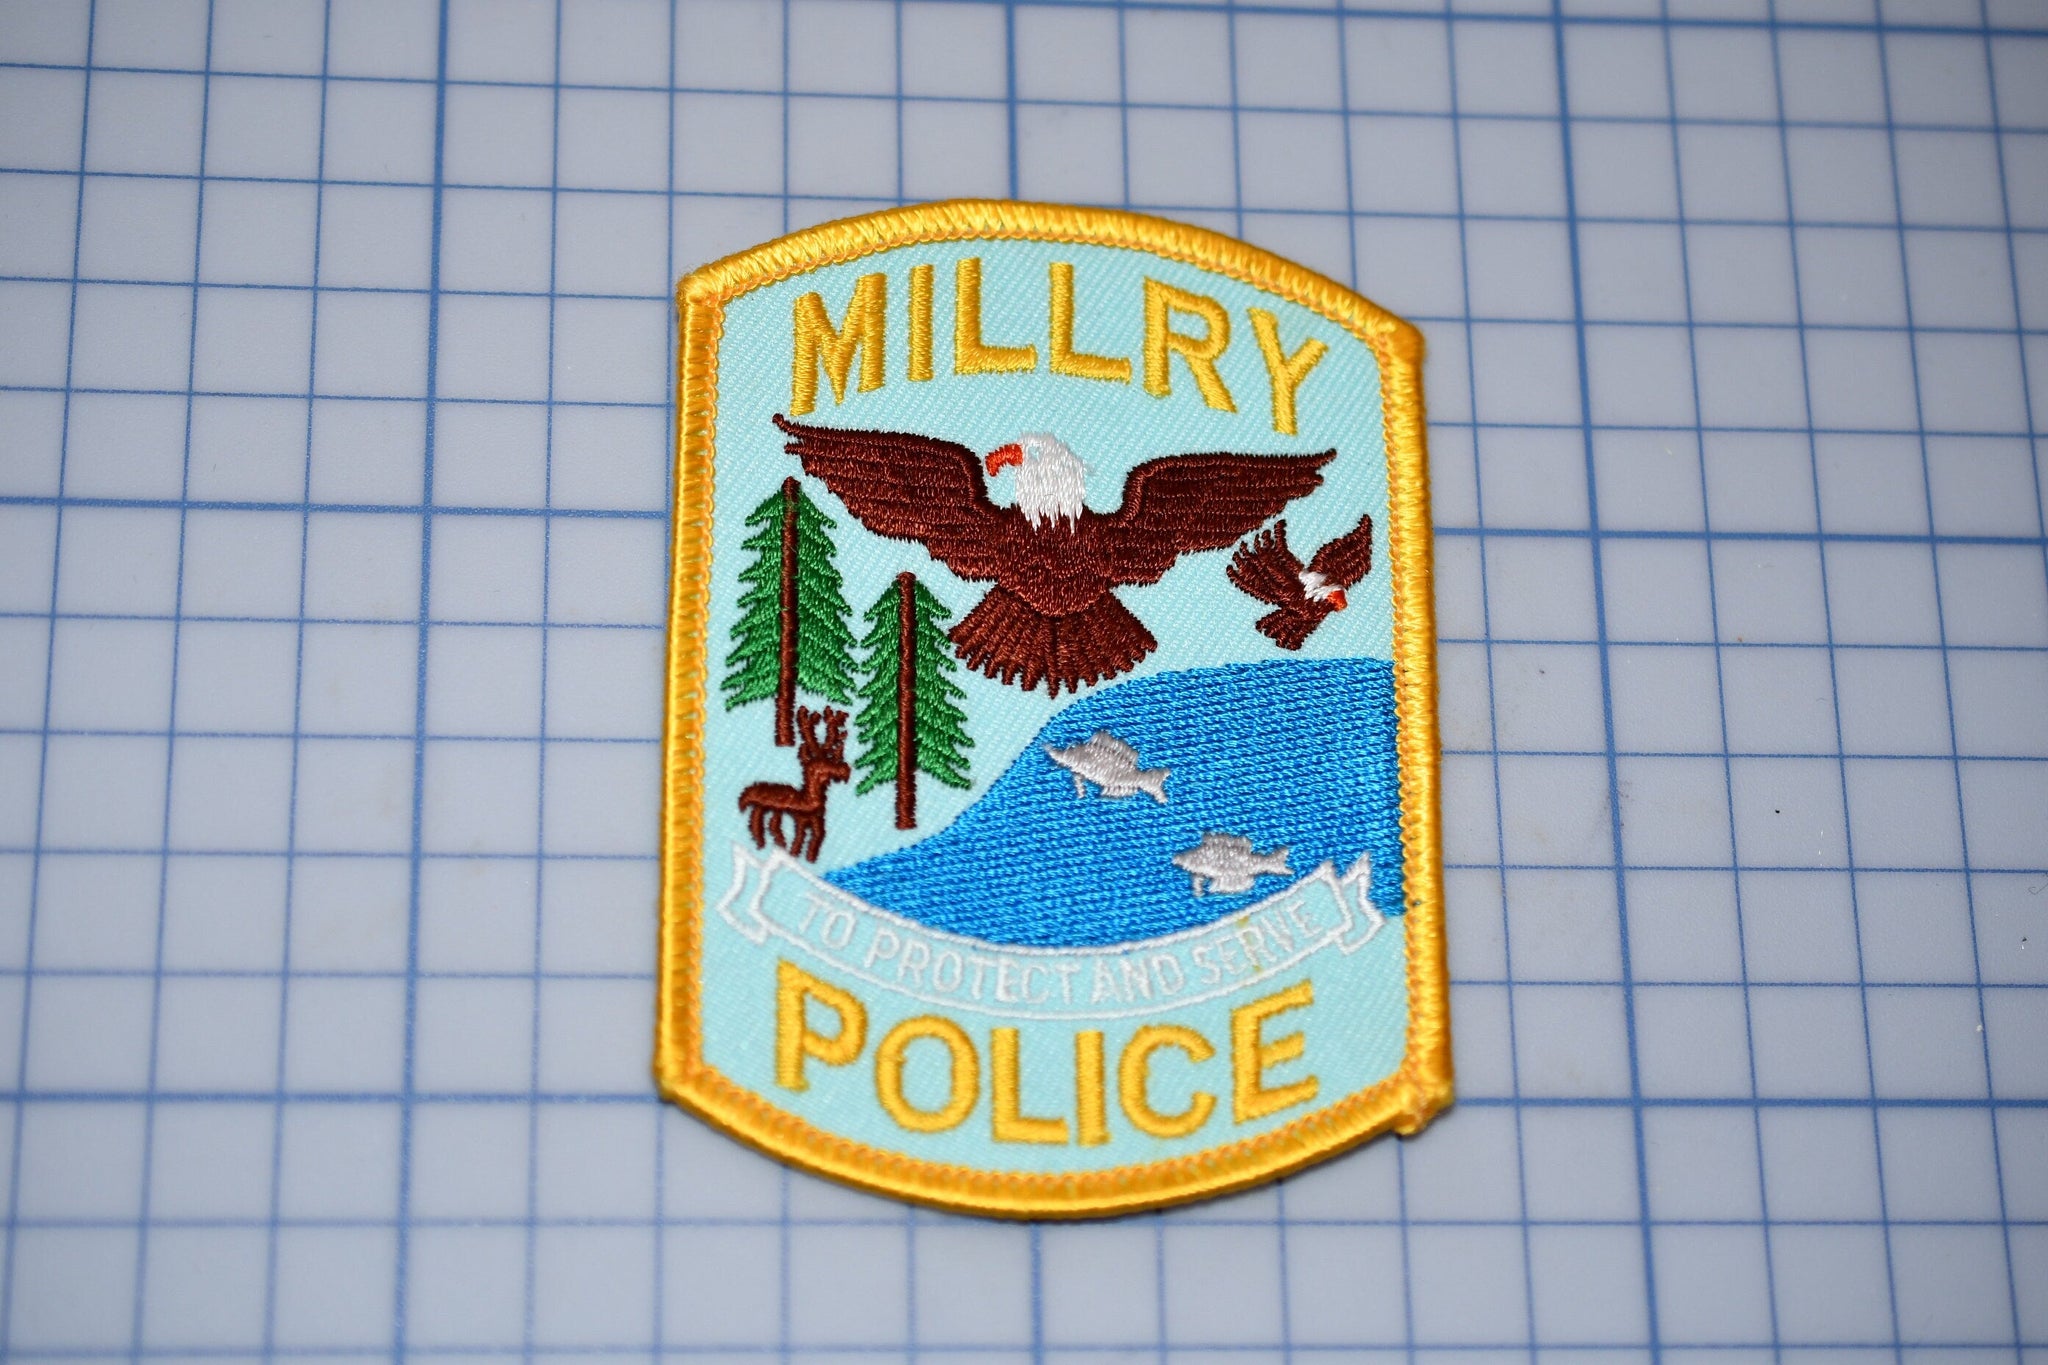 Millry Alabama Police Patch (S3-271)